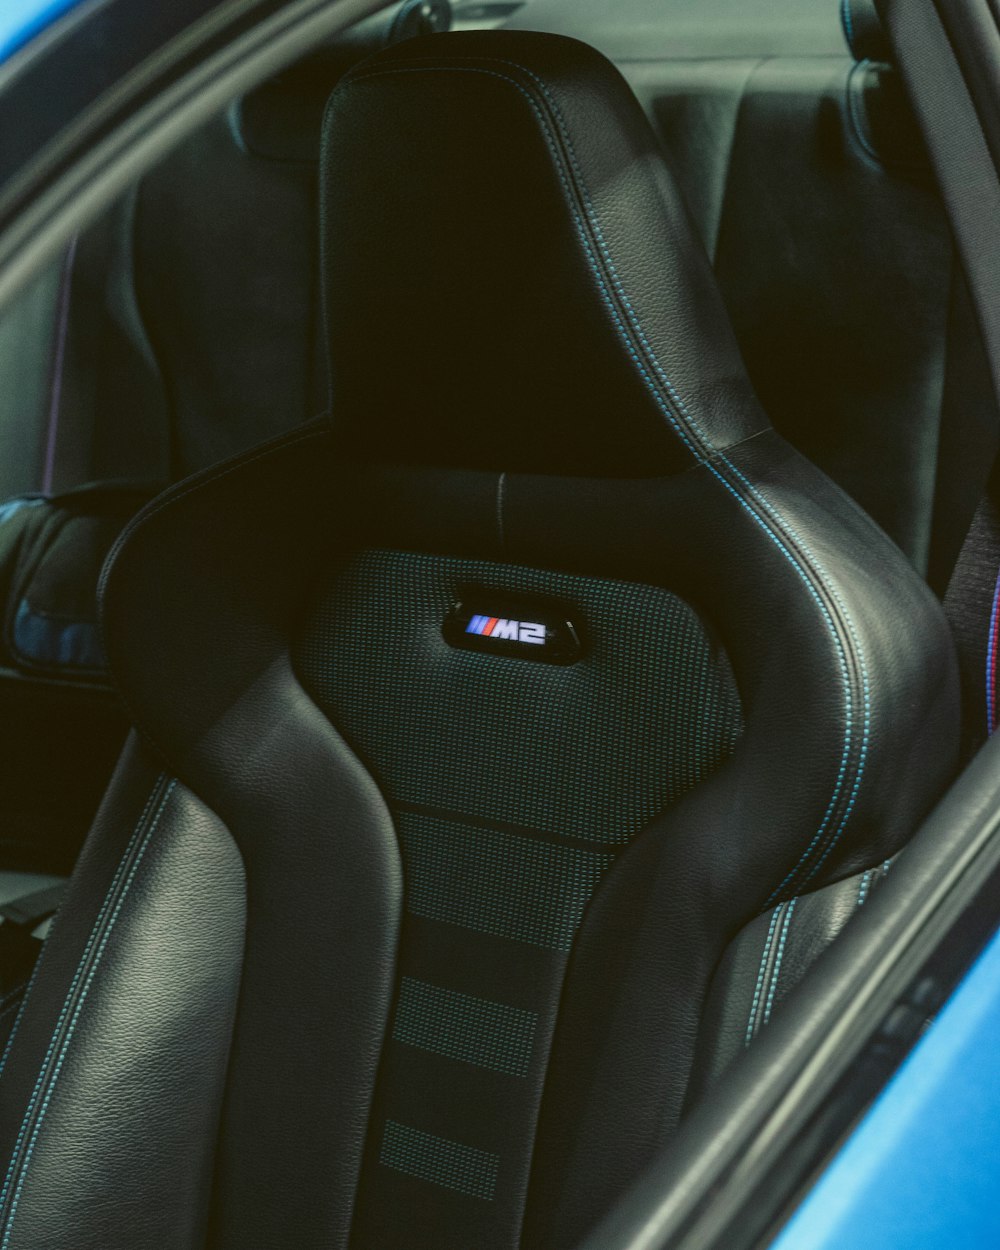 a close up of a car's seats with a blue car in the background